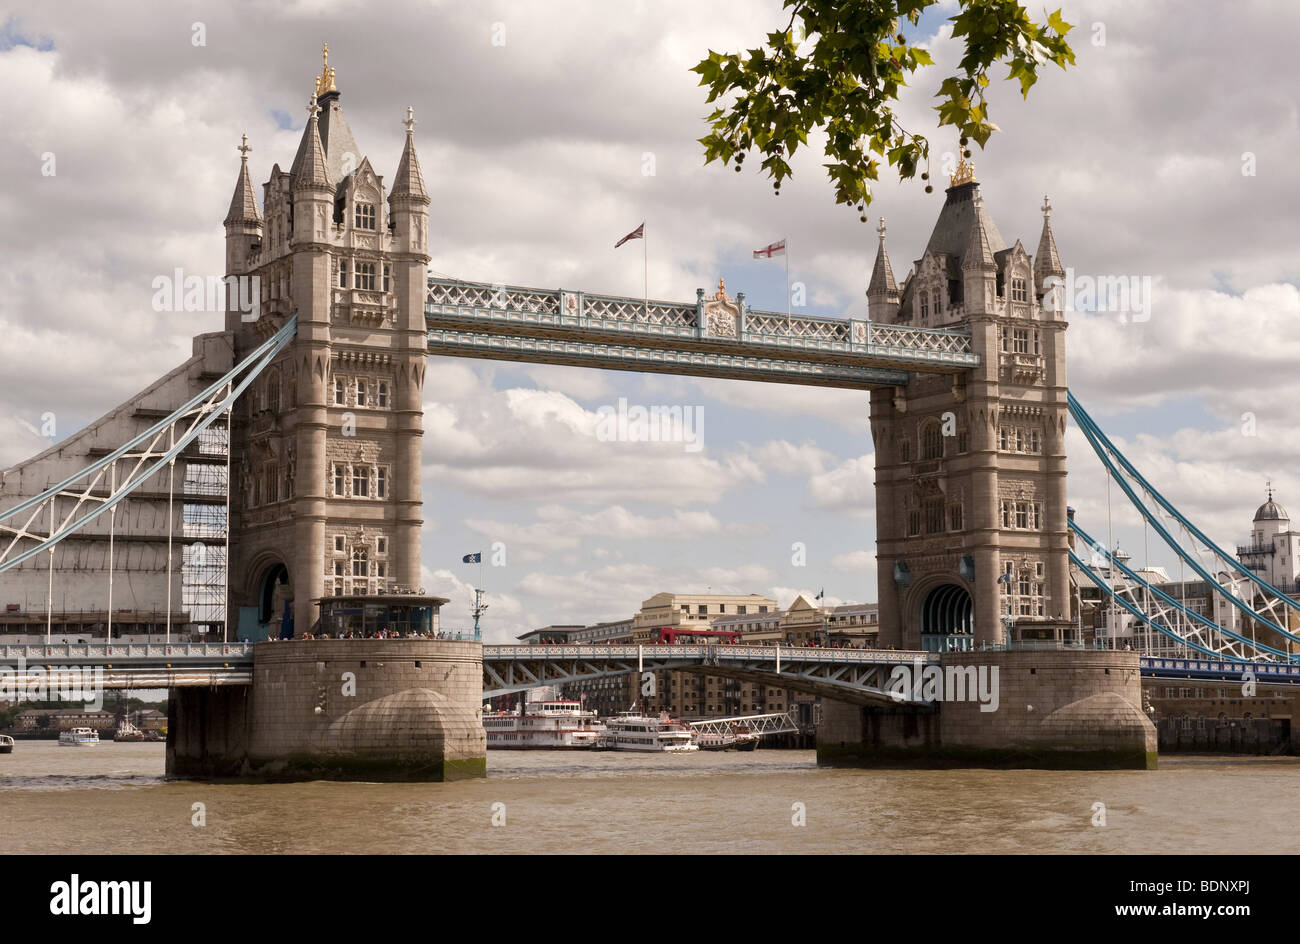 Famous landmark Tower Bridge crossing the Thames river in London, UK Stock Photo